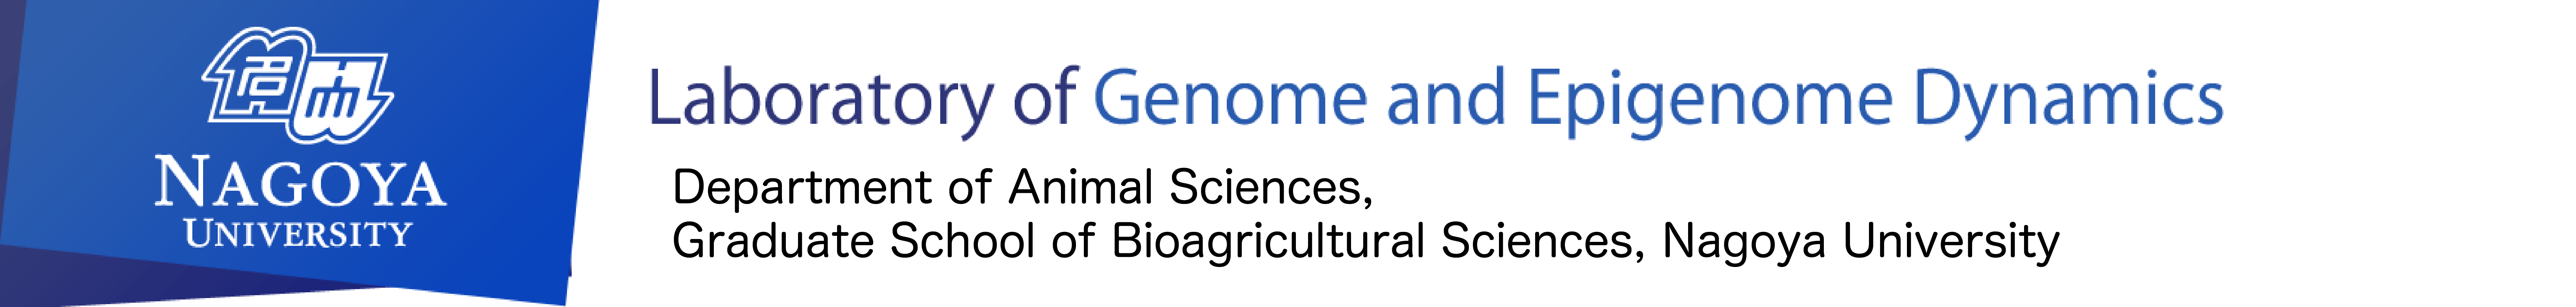 Laboratory of Genome and Epigenome Dynamics, Department of Applied Molecular Biosciences, Graduate School of Bioagricultural Sciences, Nagoya University